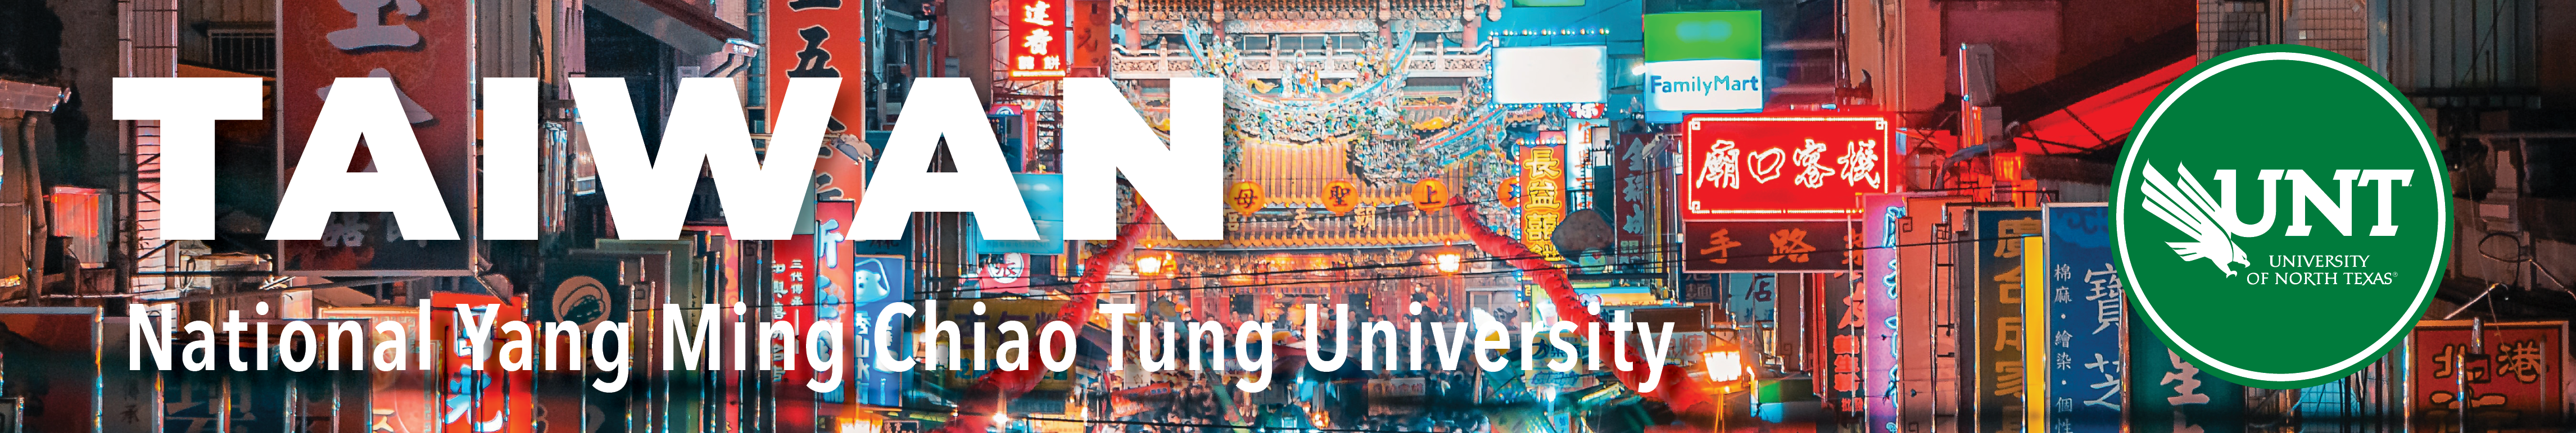 National Yang Ming Chiao Tung University Banner